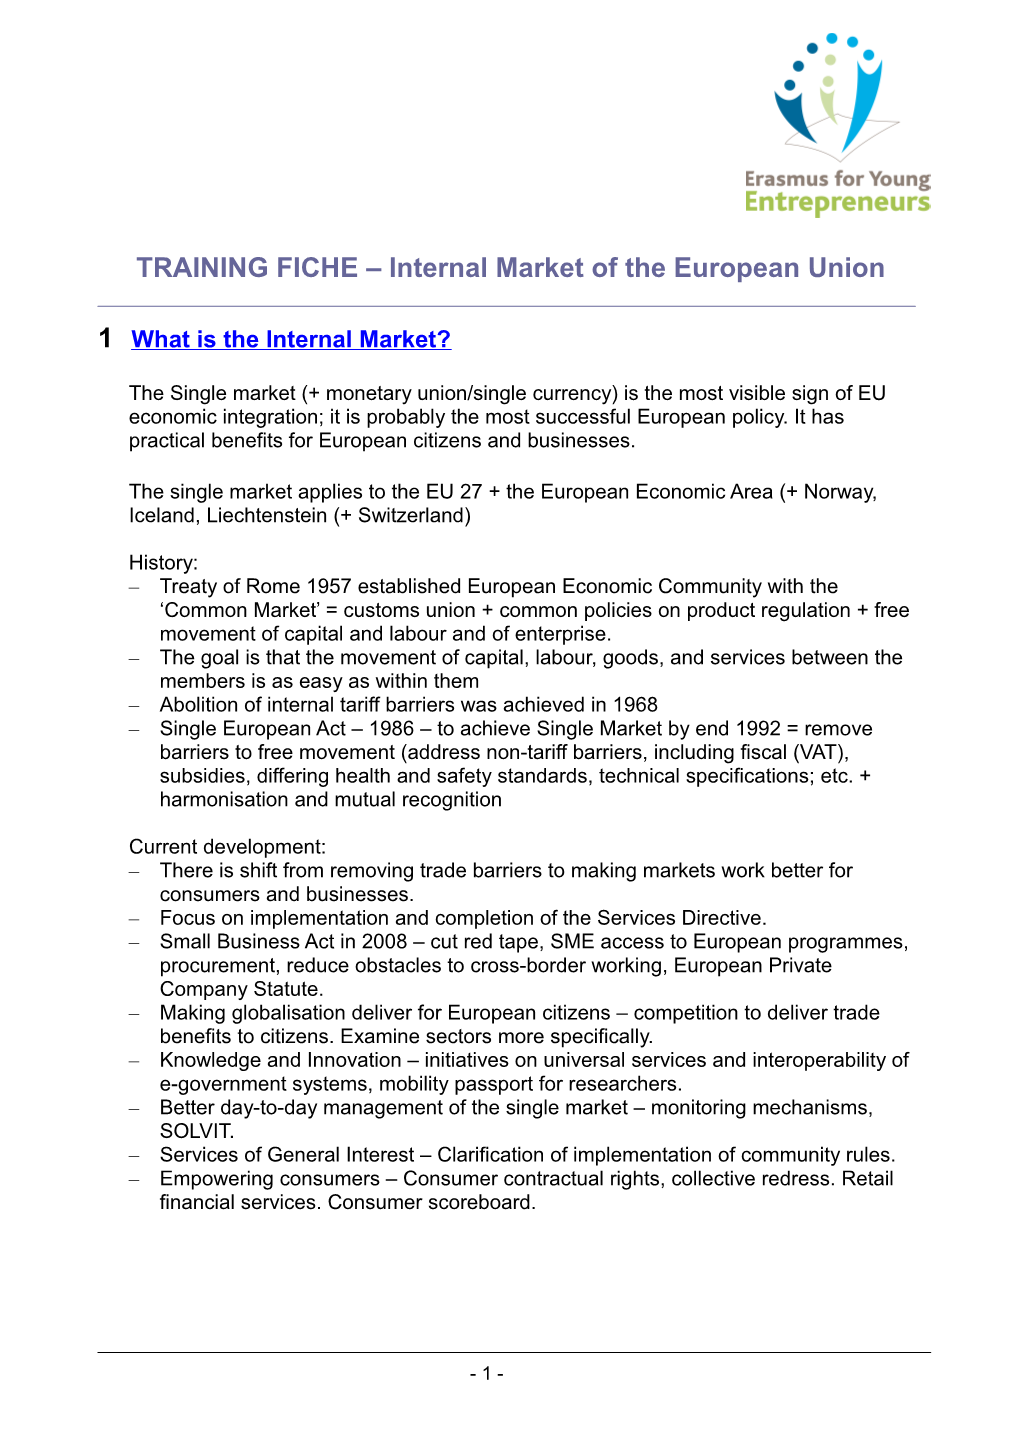 TRAINING FICHE Internal Market of the European Union